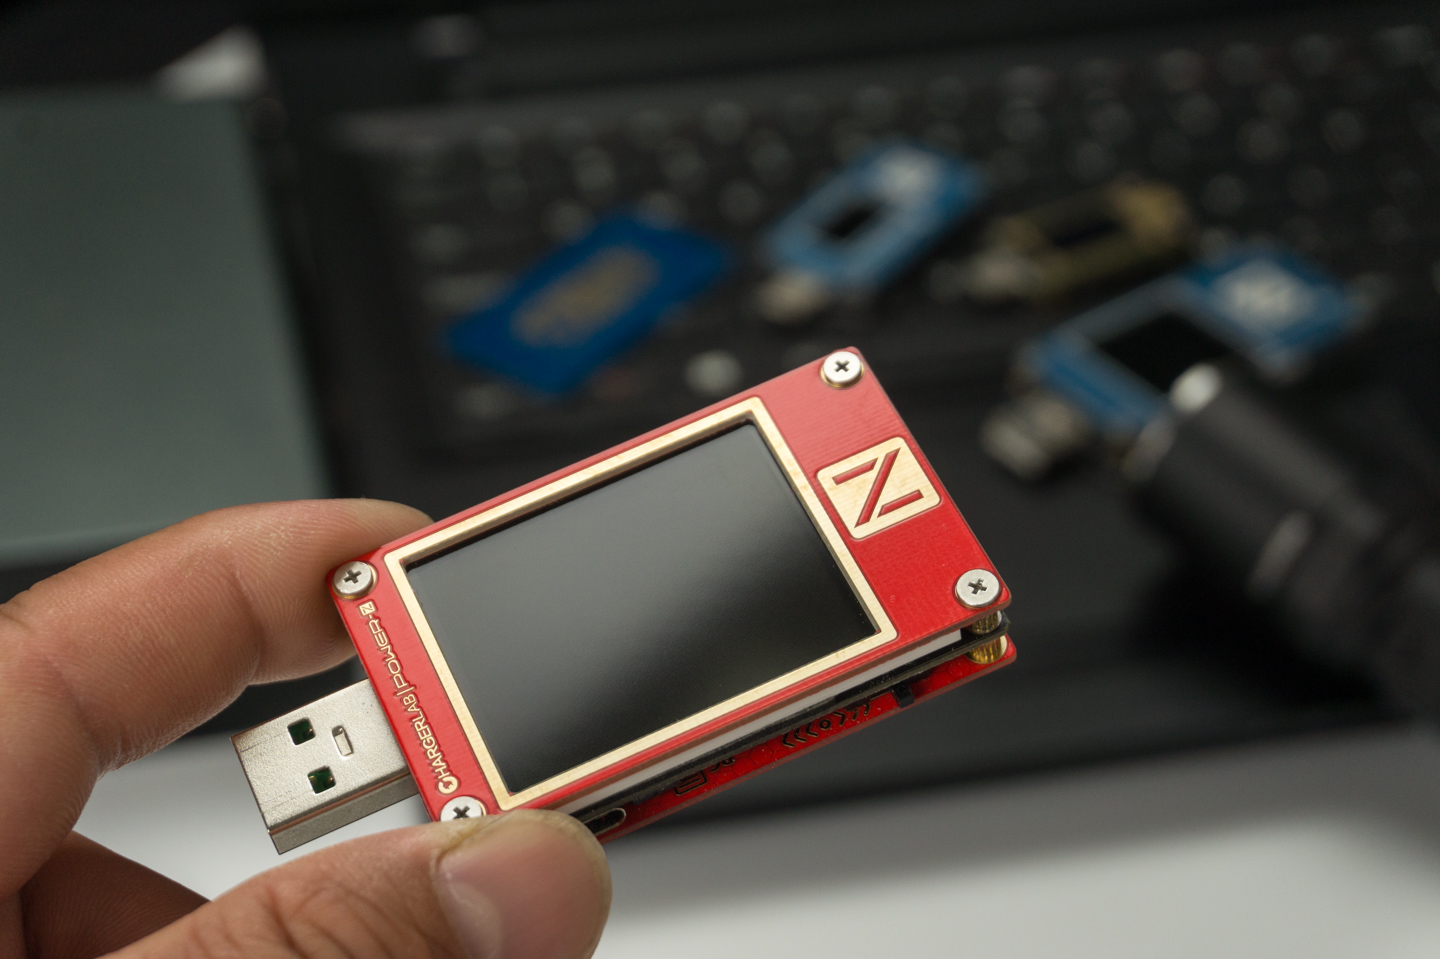 USB测试仪中的霸主，ChargerLAB POWER-Z KT002负载测试仪入门体验-POWER-Z